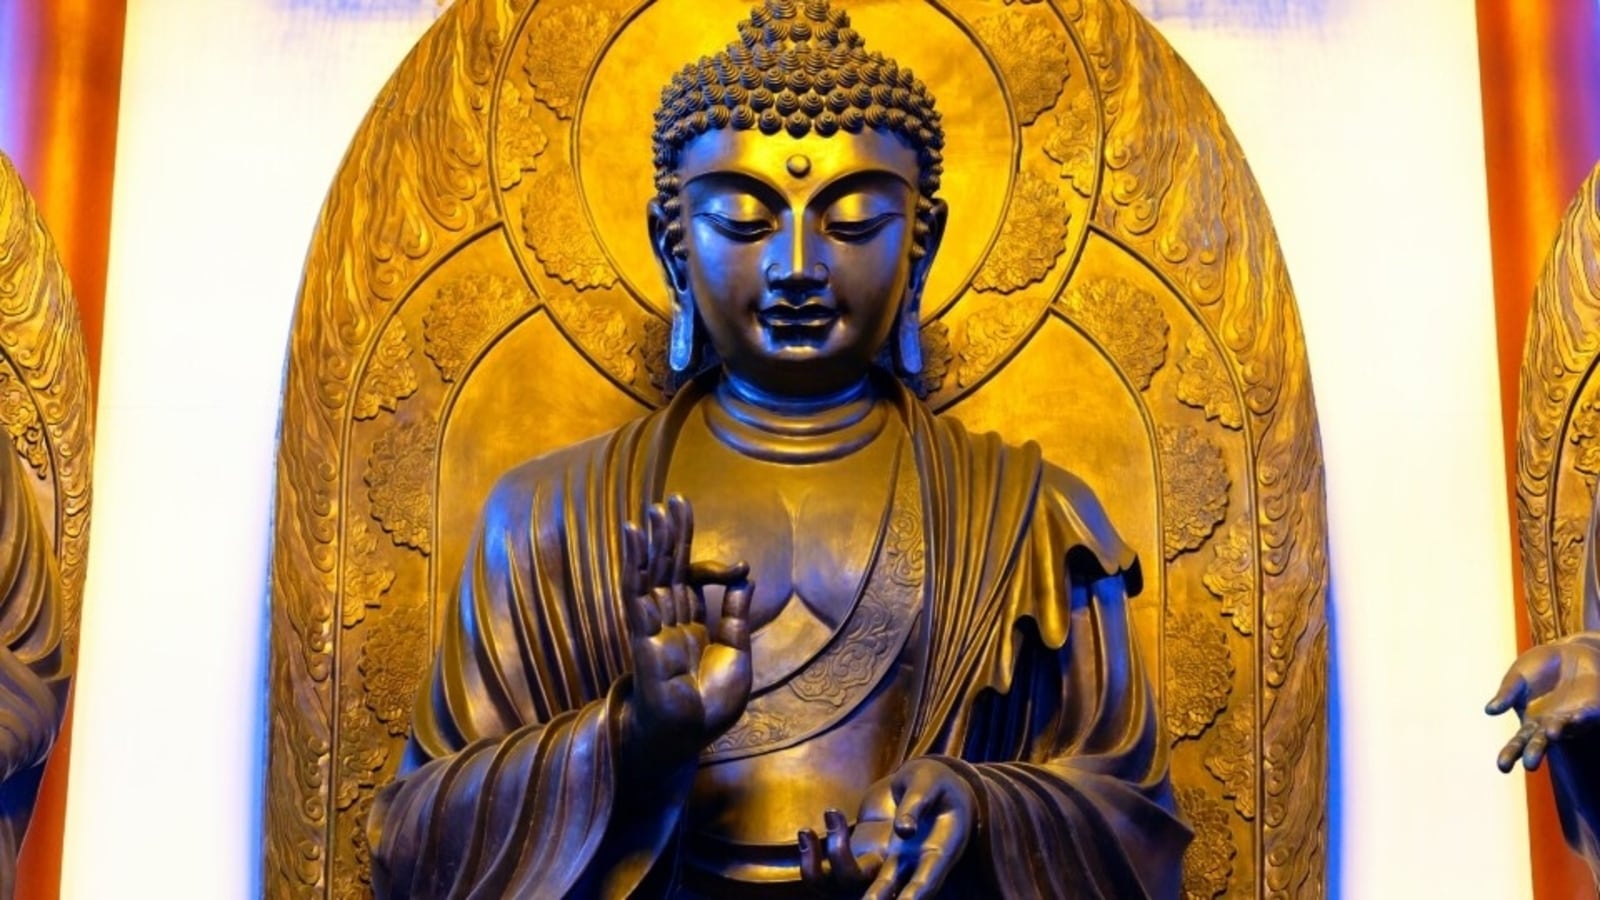 buddha teaching quotes